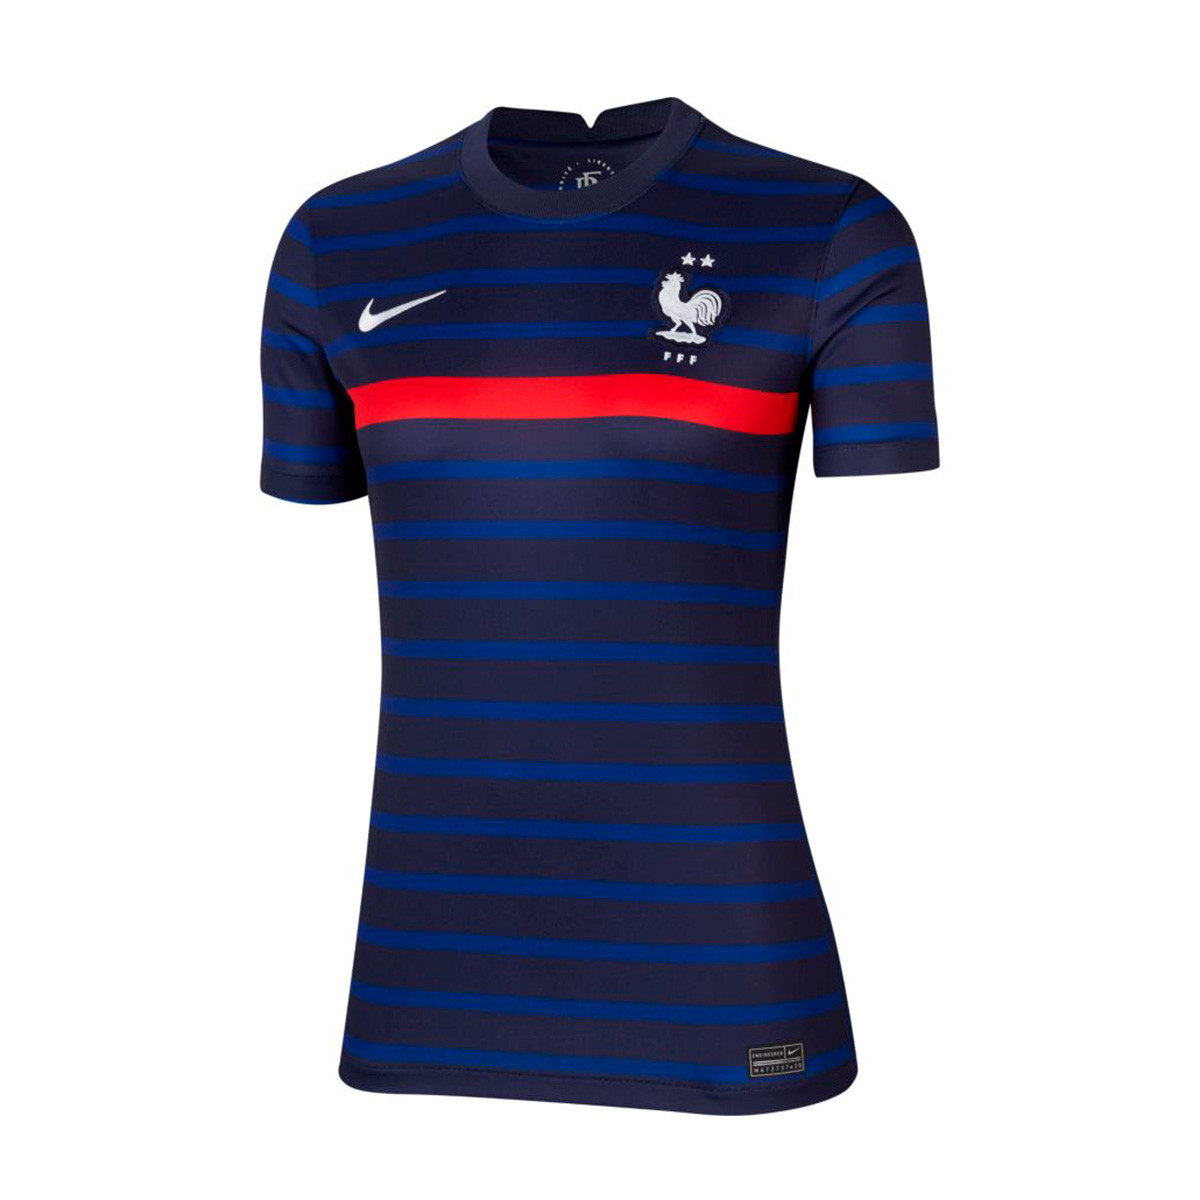 Jersey Nike Women France Stadium Home jersey 2020-2021 Blackened blue ...